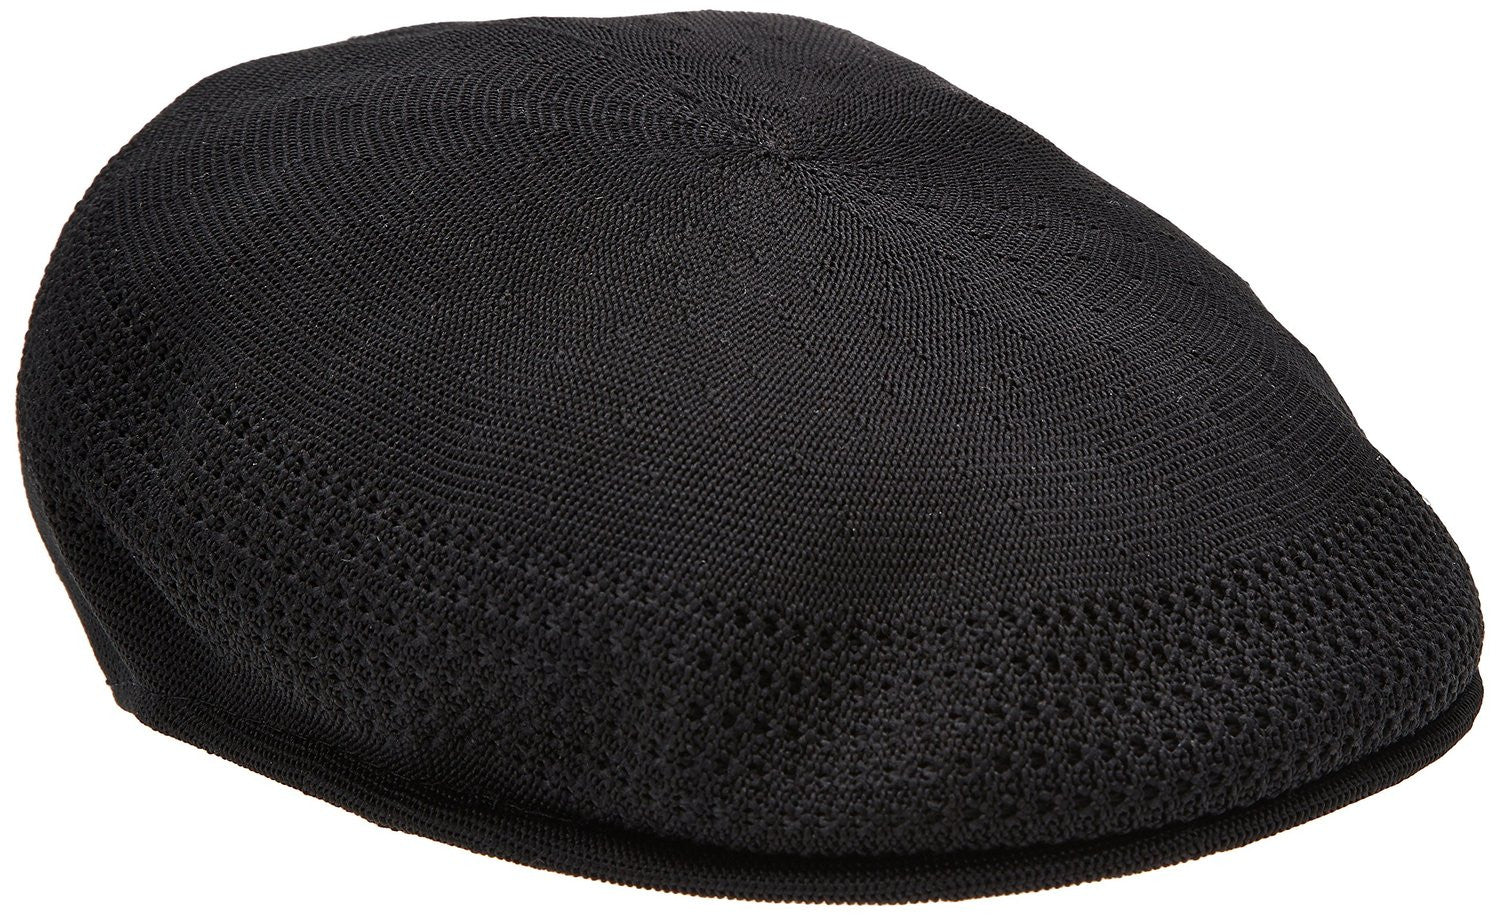 Kangol Hats: Ventair 504 CAP Black – Army Navy Now